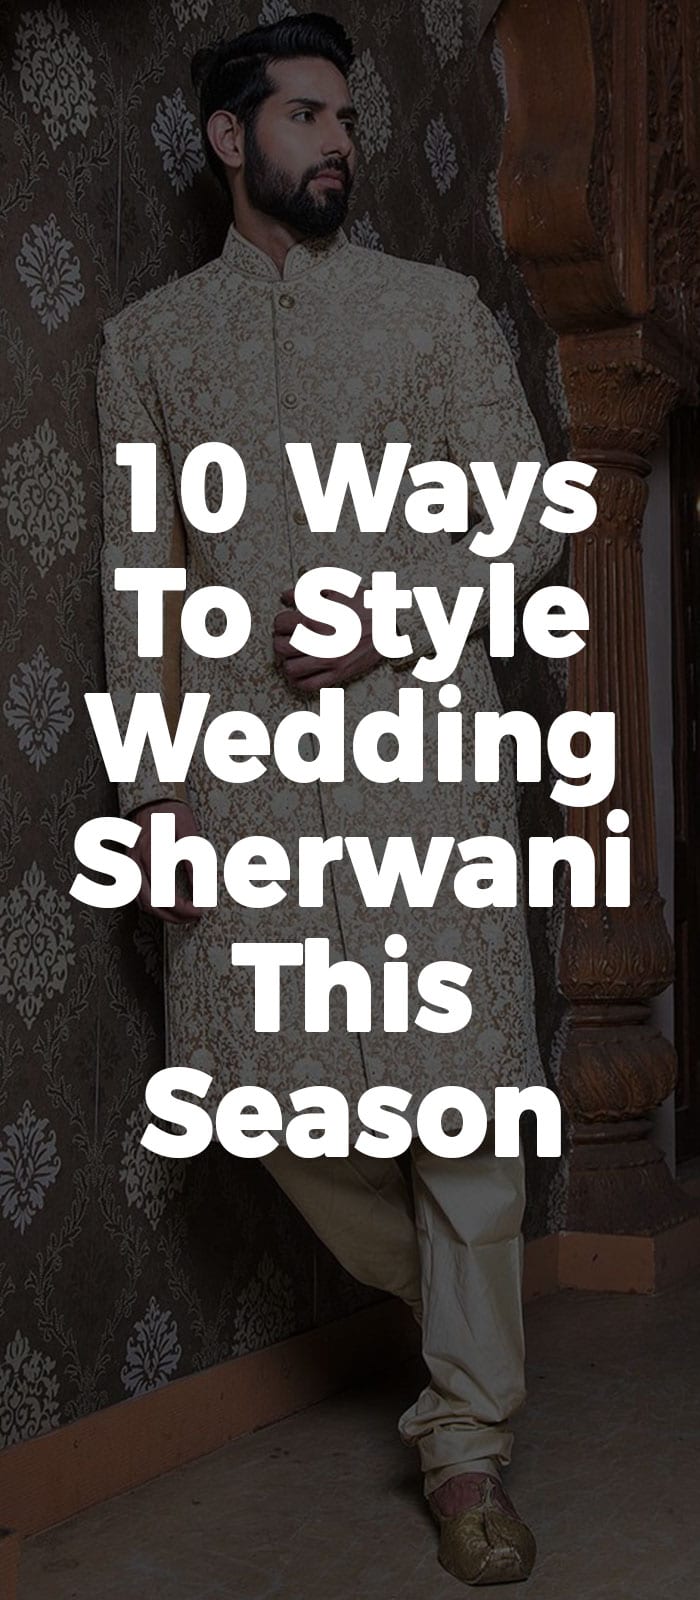 10 Ways To Style Wedding Sherwanis This Season ⋆ Best Fashion Blog For Men  